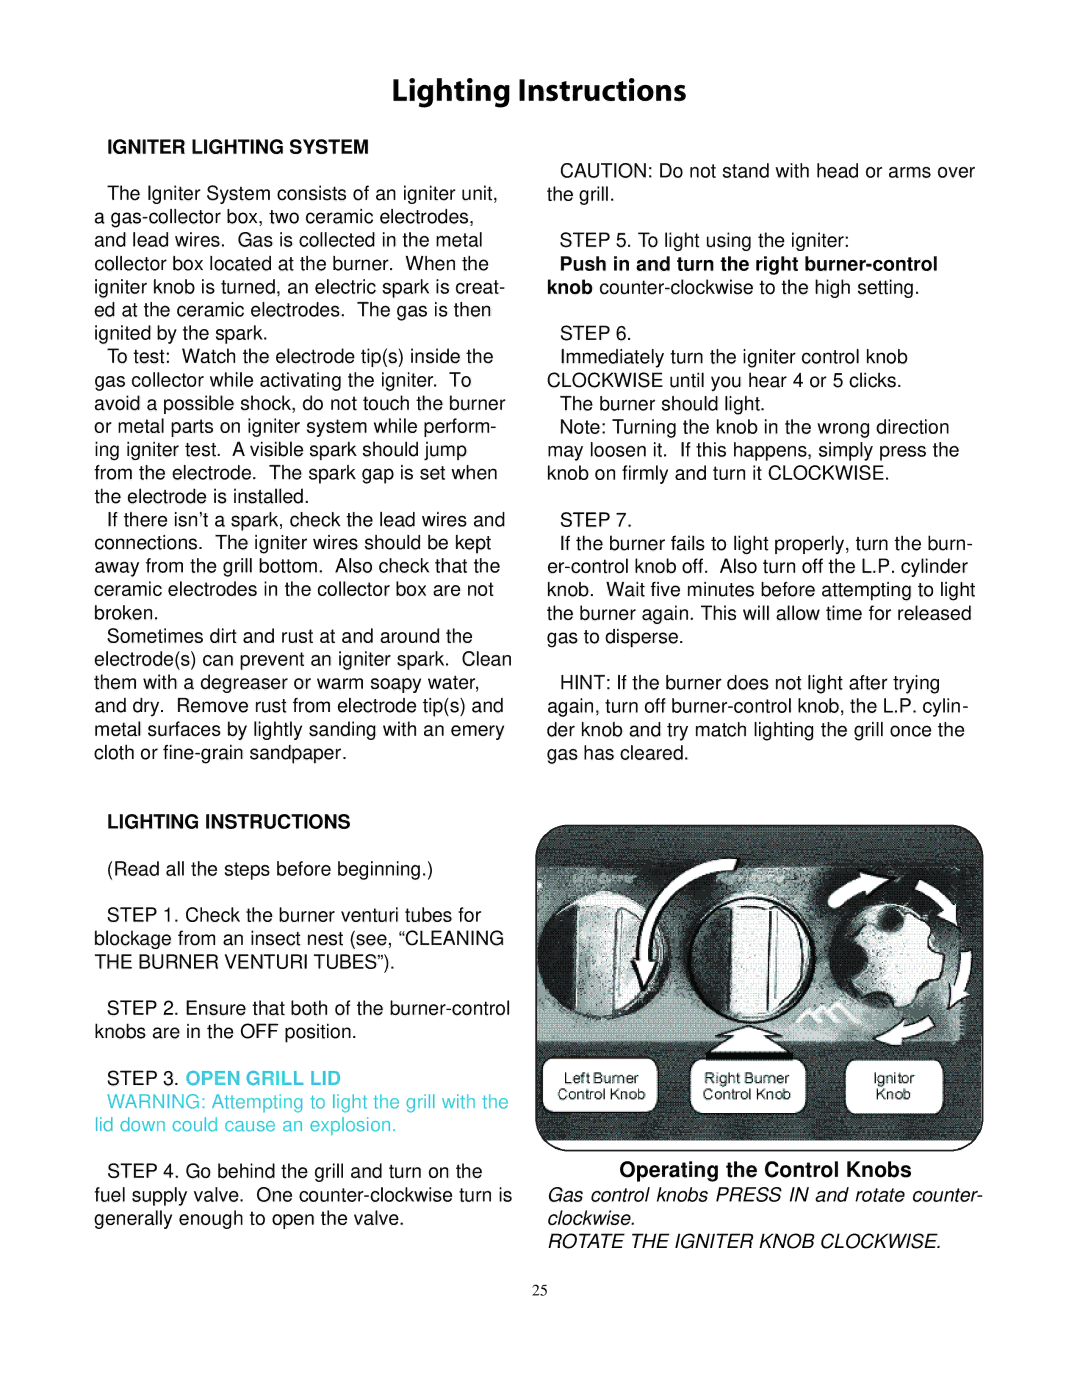 CFM Corporation 7000 owner manual Igniter Lighting System, Lighting Instructions 